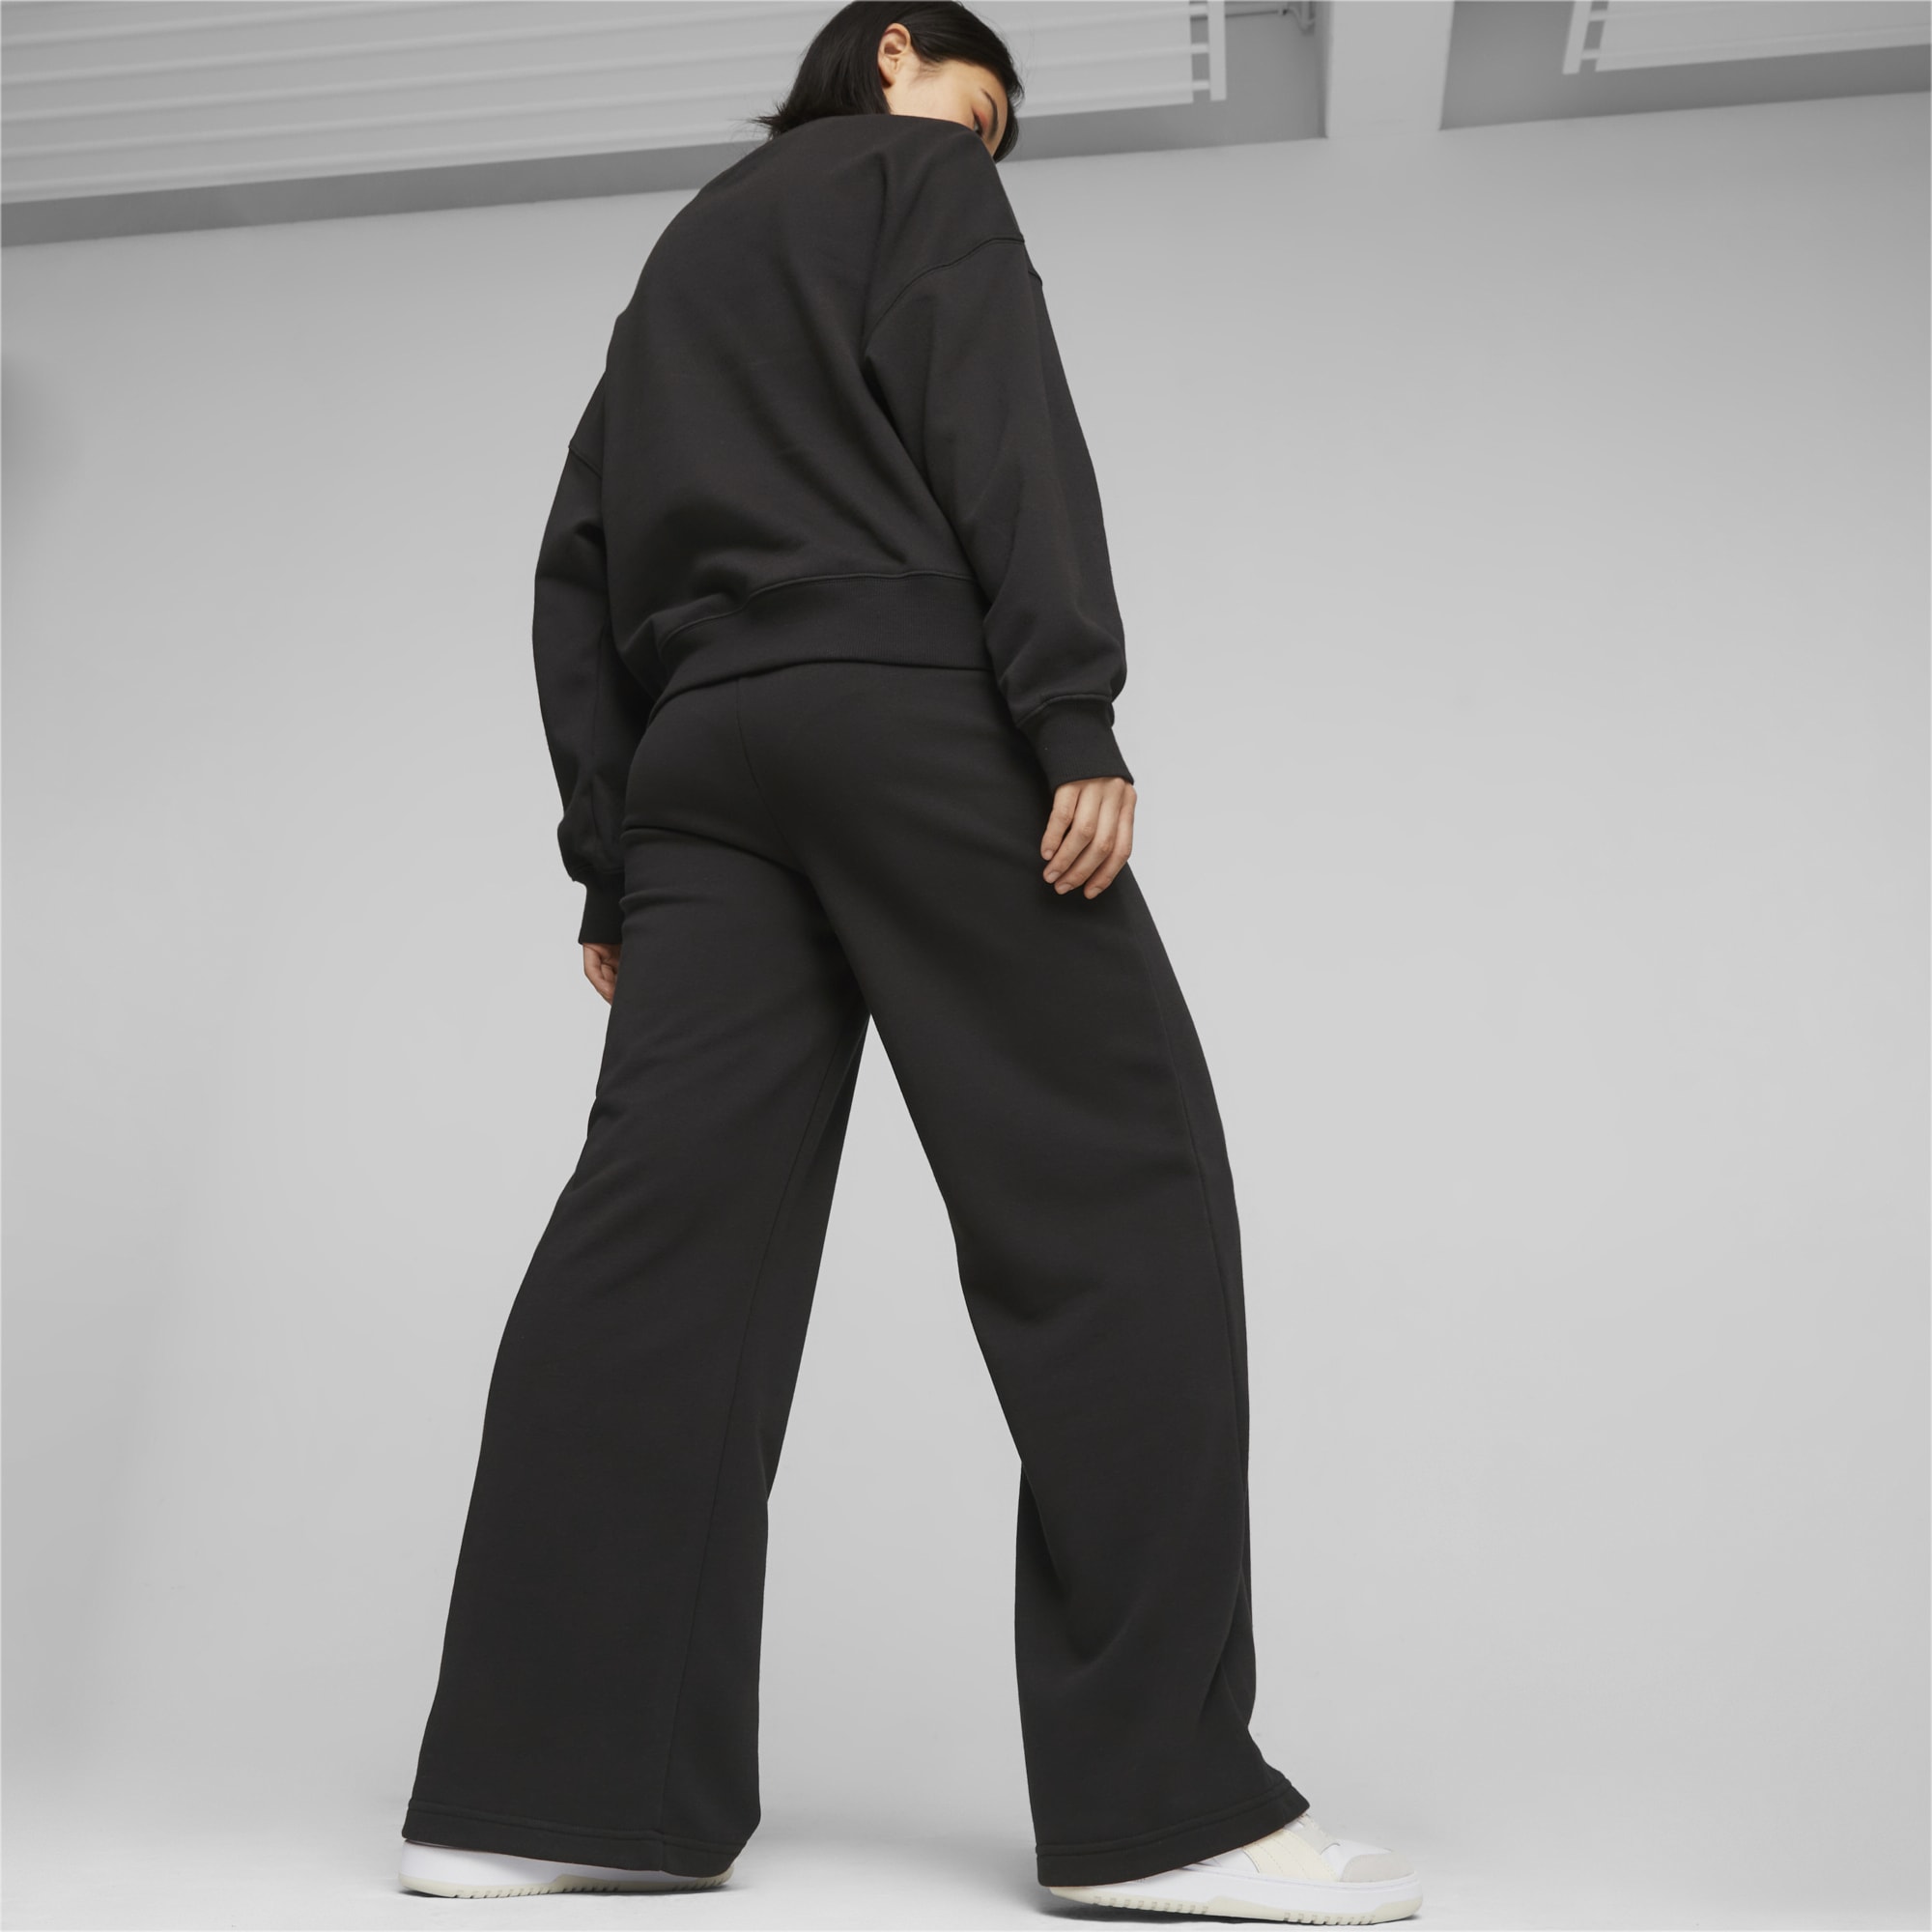 PUMA Classics Women's Relaxed Sweatpants, Black, Size XS, Clothing